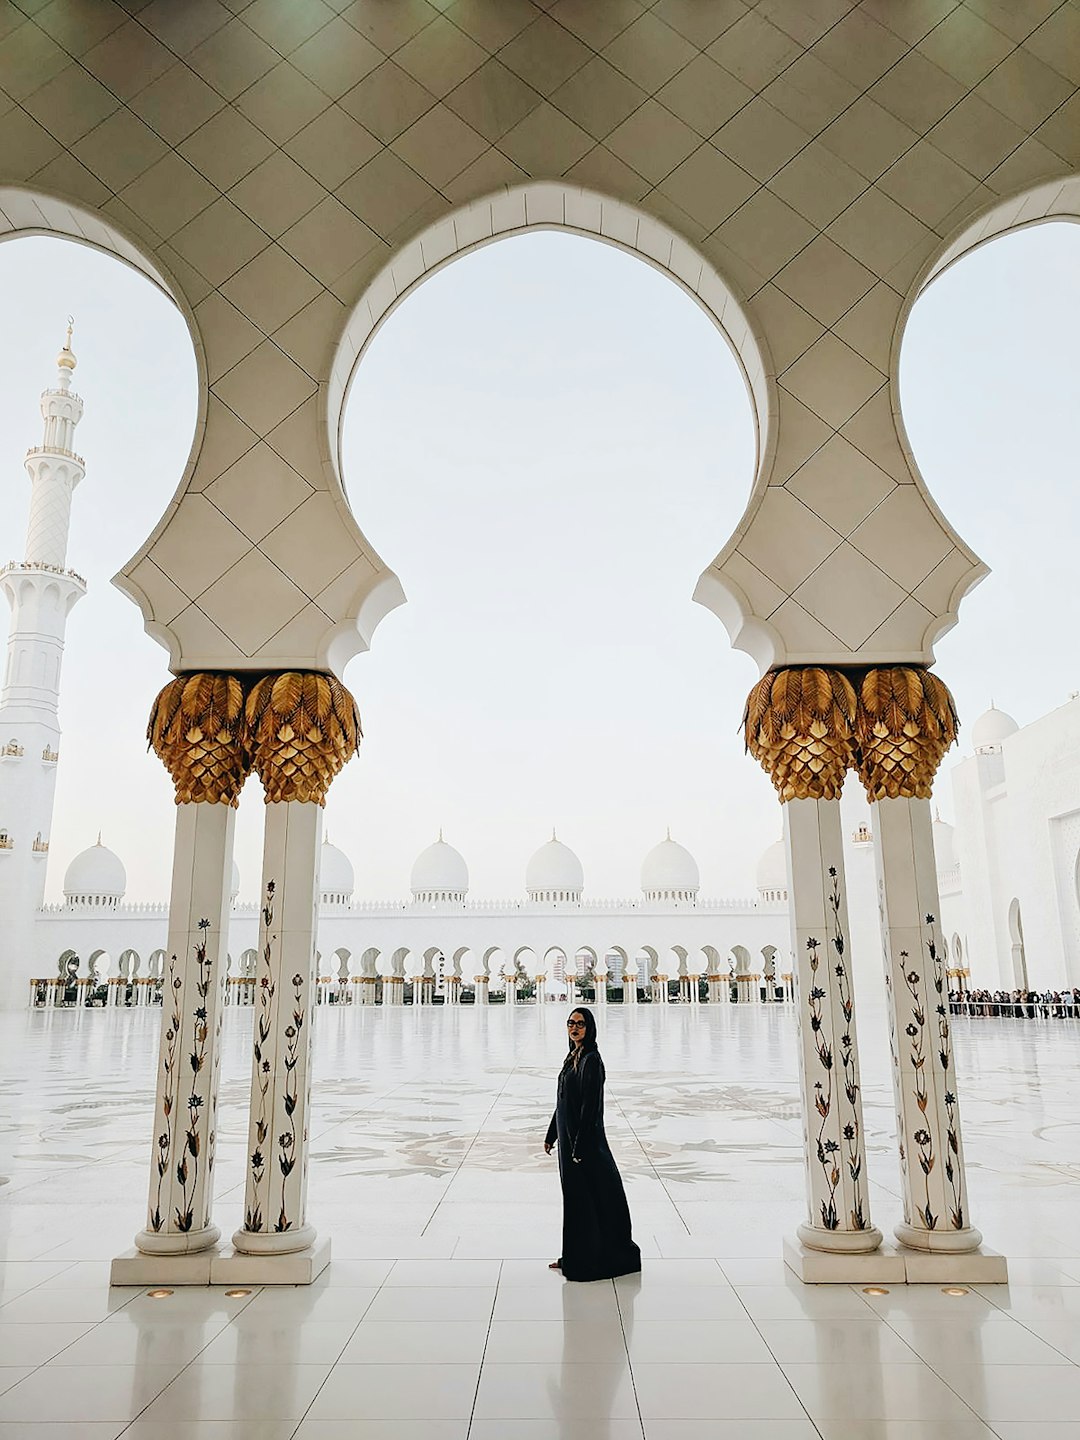 Mosque photo spot Abu Dhabi Sheikh Zayed Grand Mosque Center